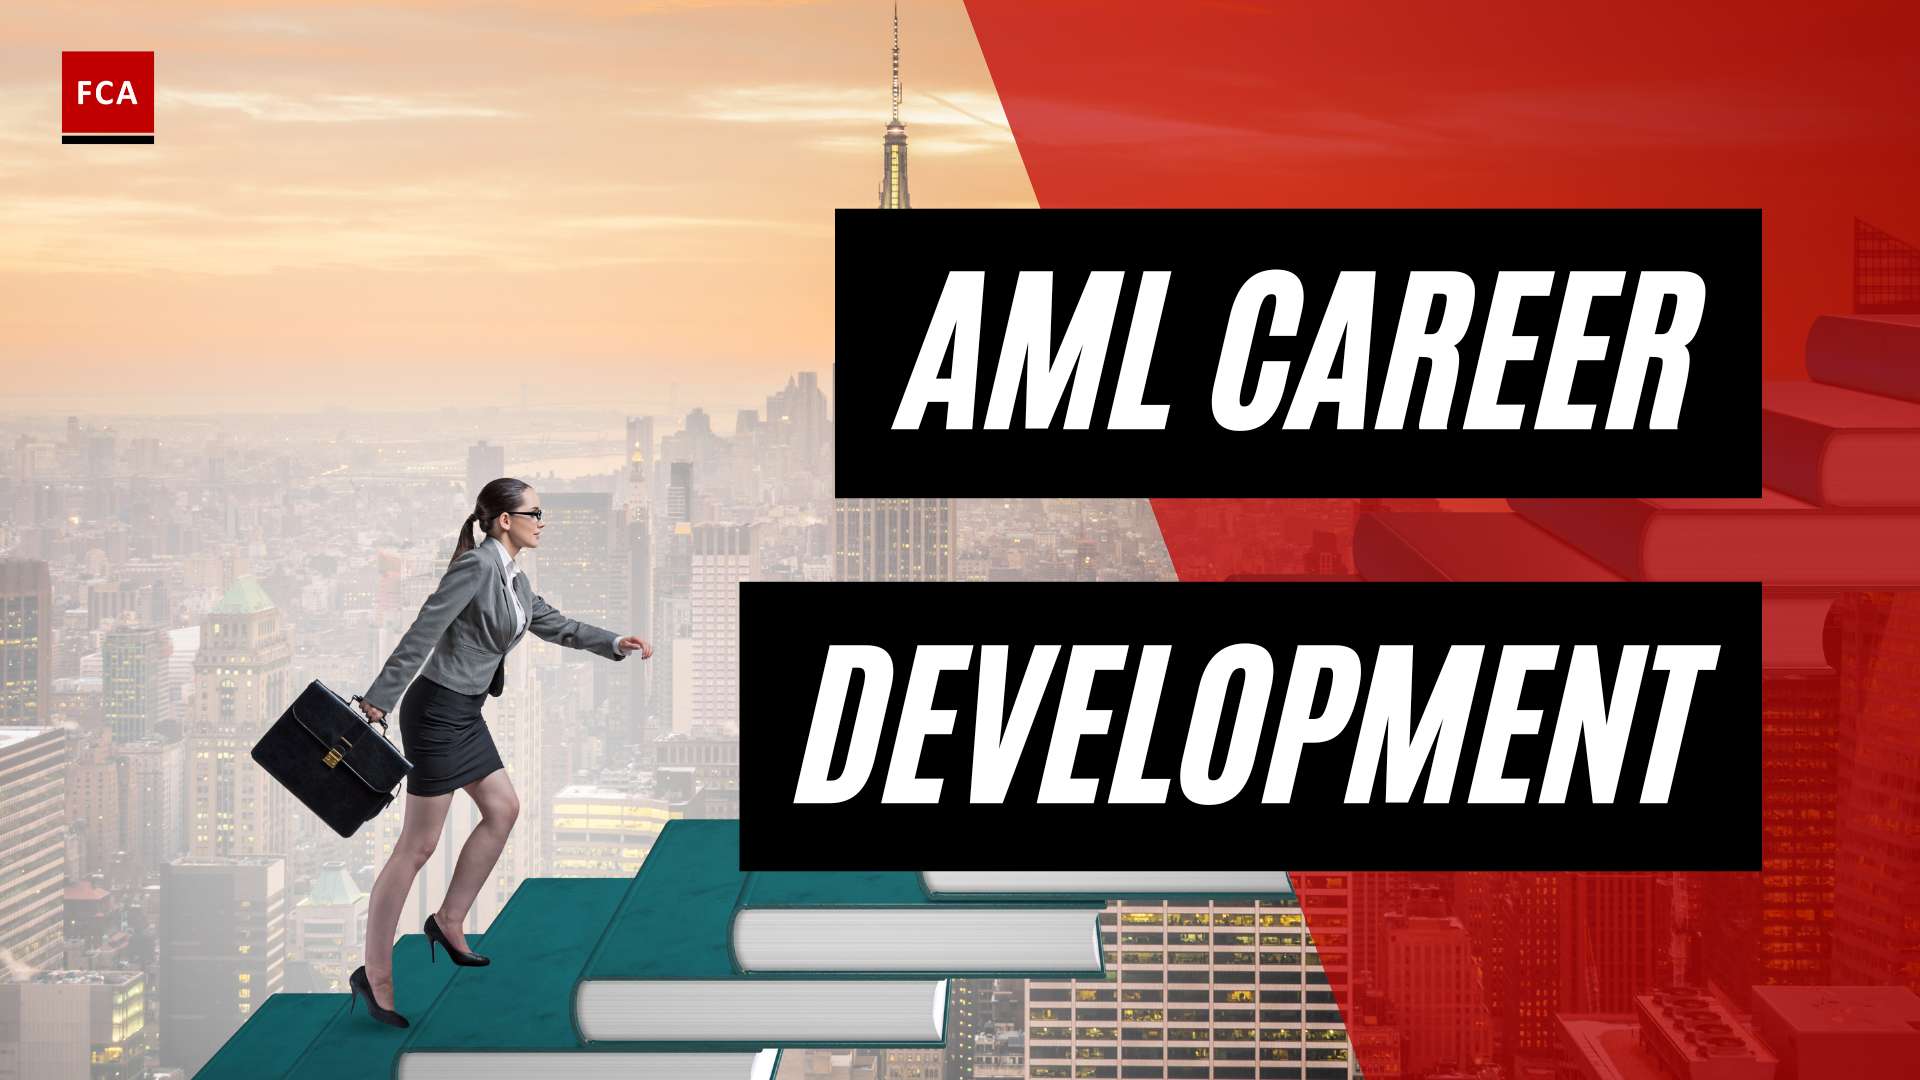 Accelerate Your Aml Career: Master The Art Of Aml Career Development